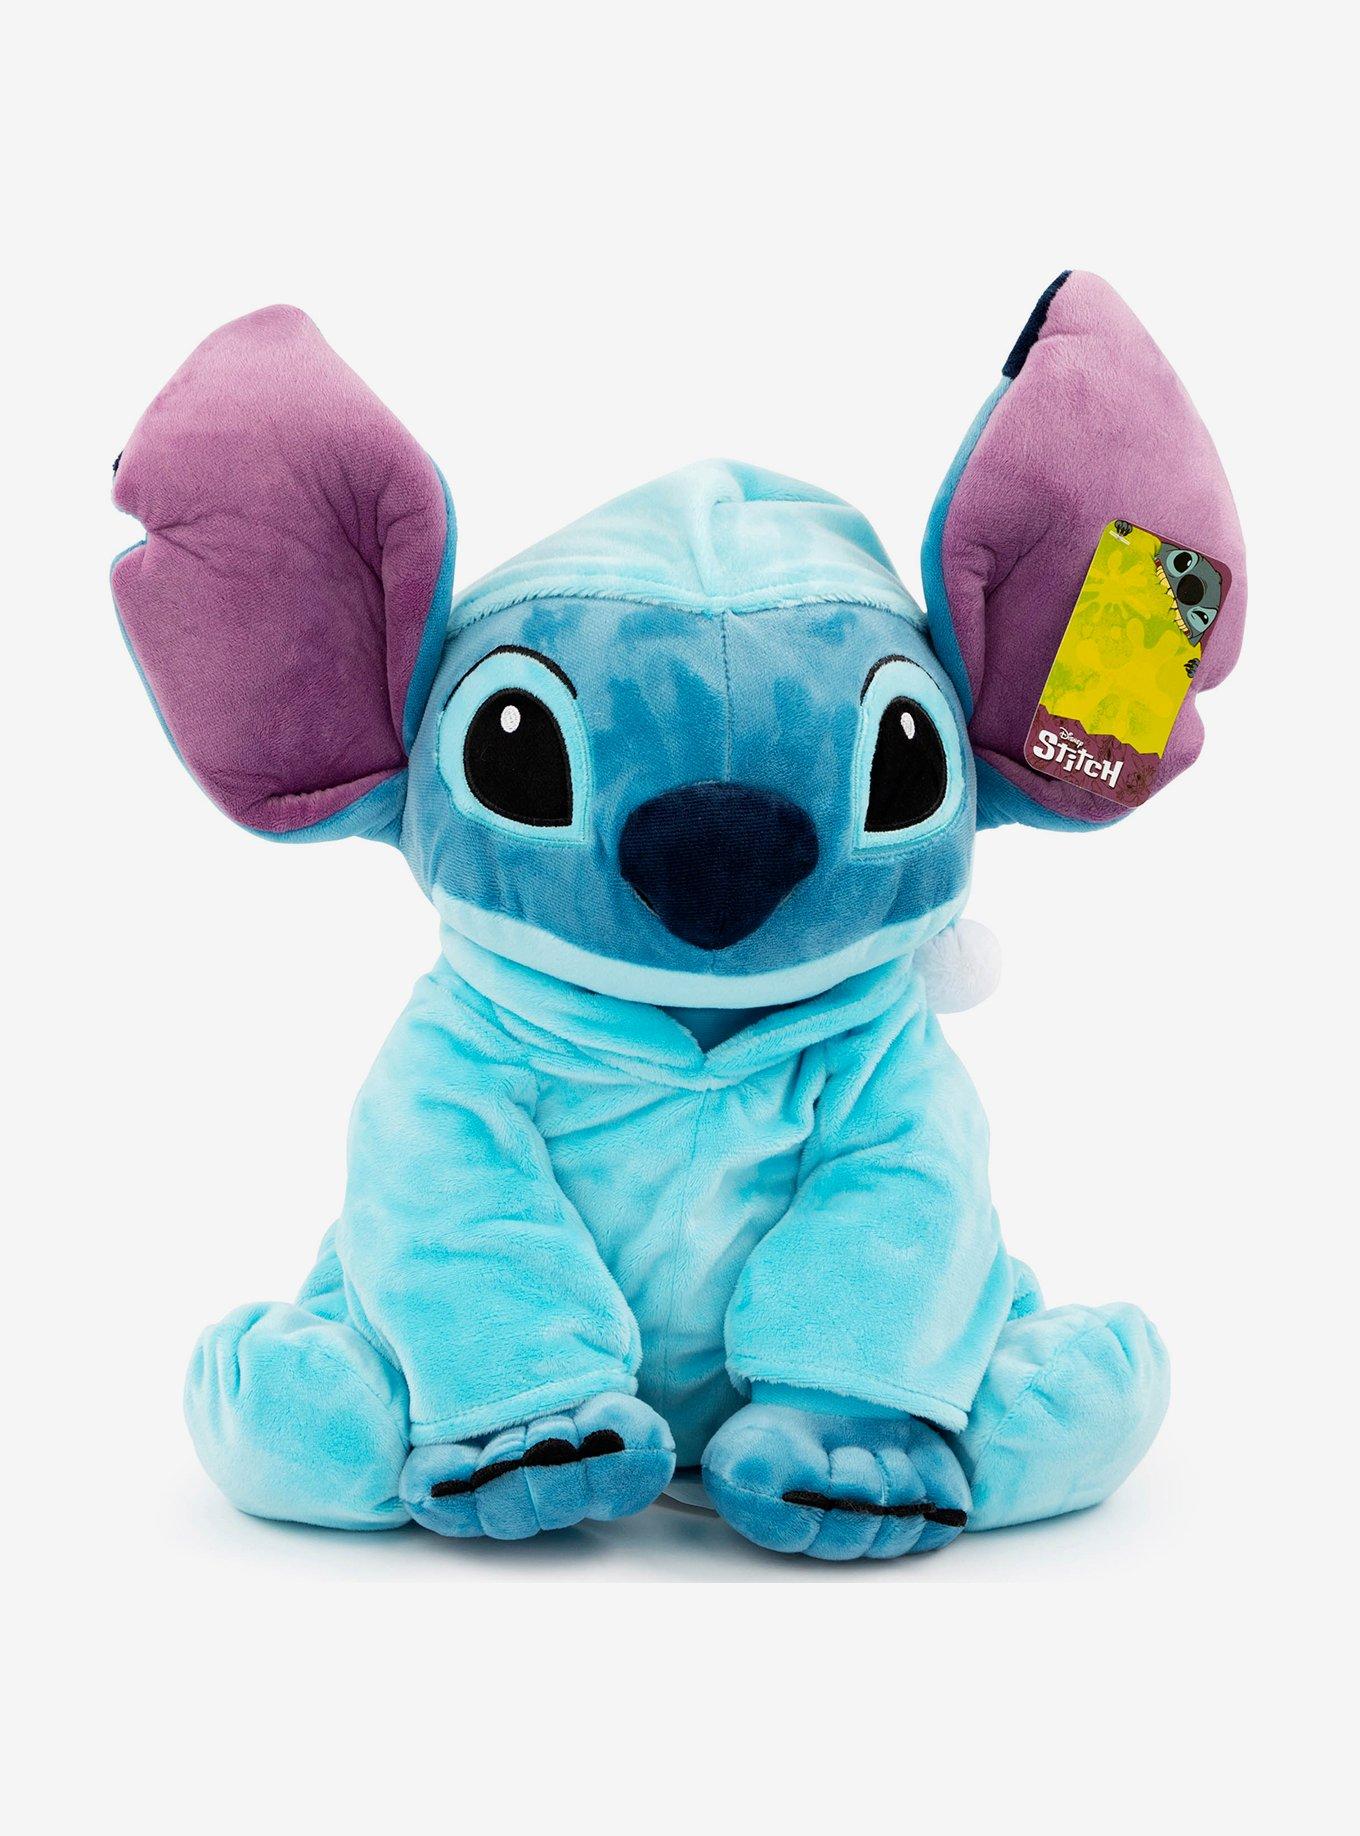 Disney Lilo & Stitch Pajamas Pillow Buddy Plush